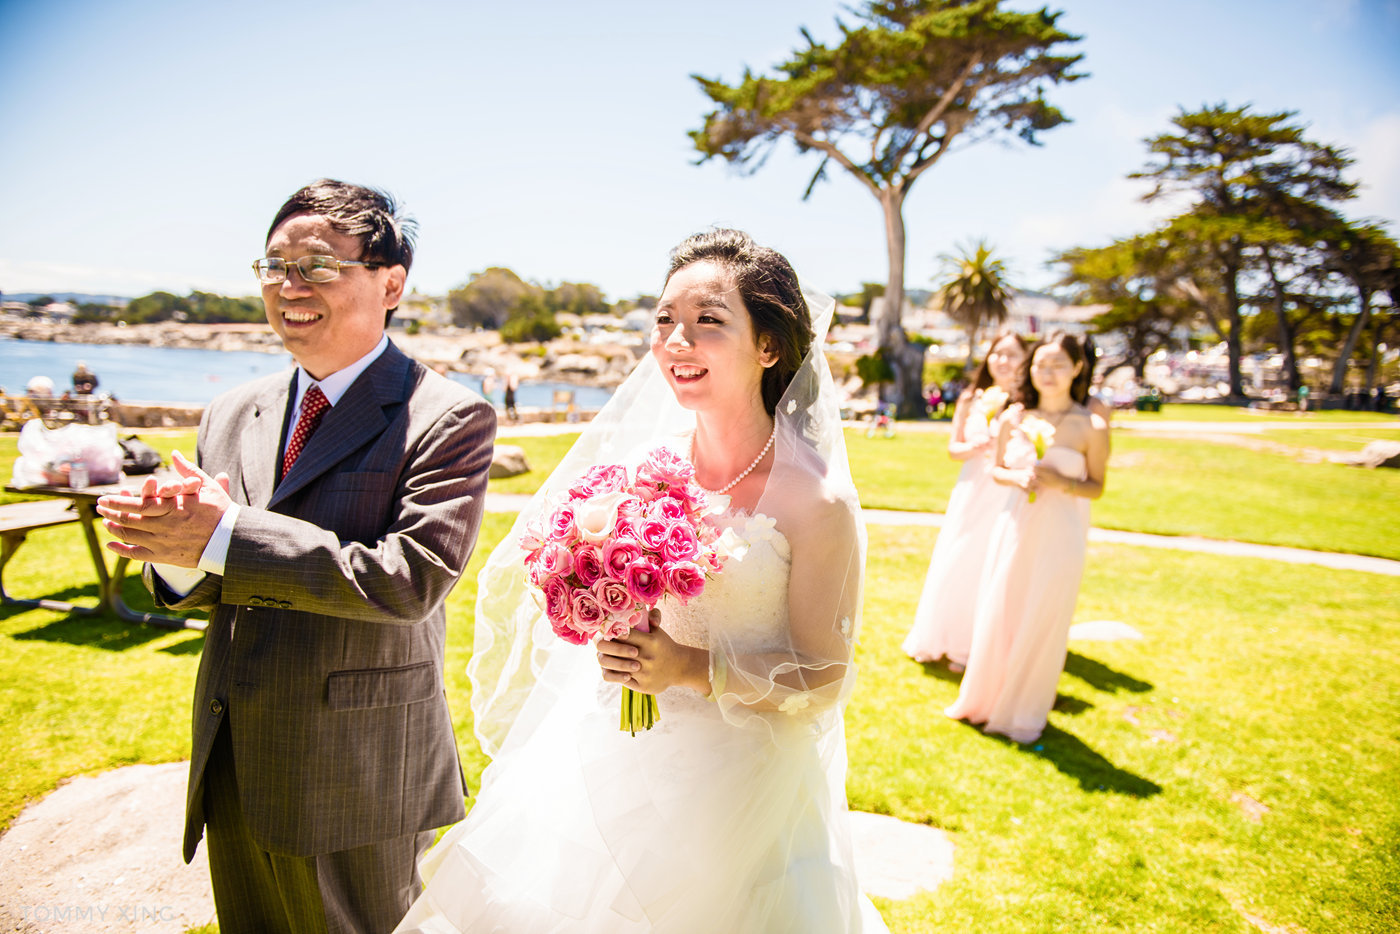 Lovers Point Park Wedding Monterey Wenping & Li  San Francisco Bay Area 旧金山湾区 洛杉矶婚礼婚纱照摄影师 Tommy Xing Photography 047.jpg